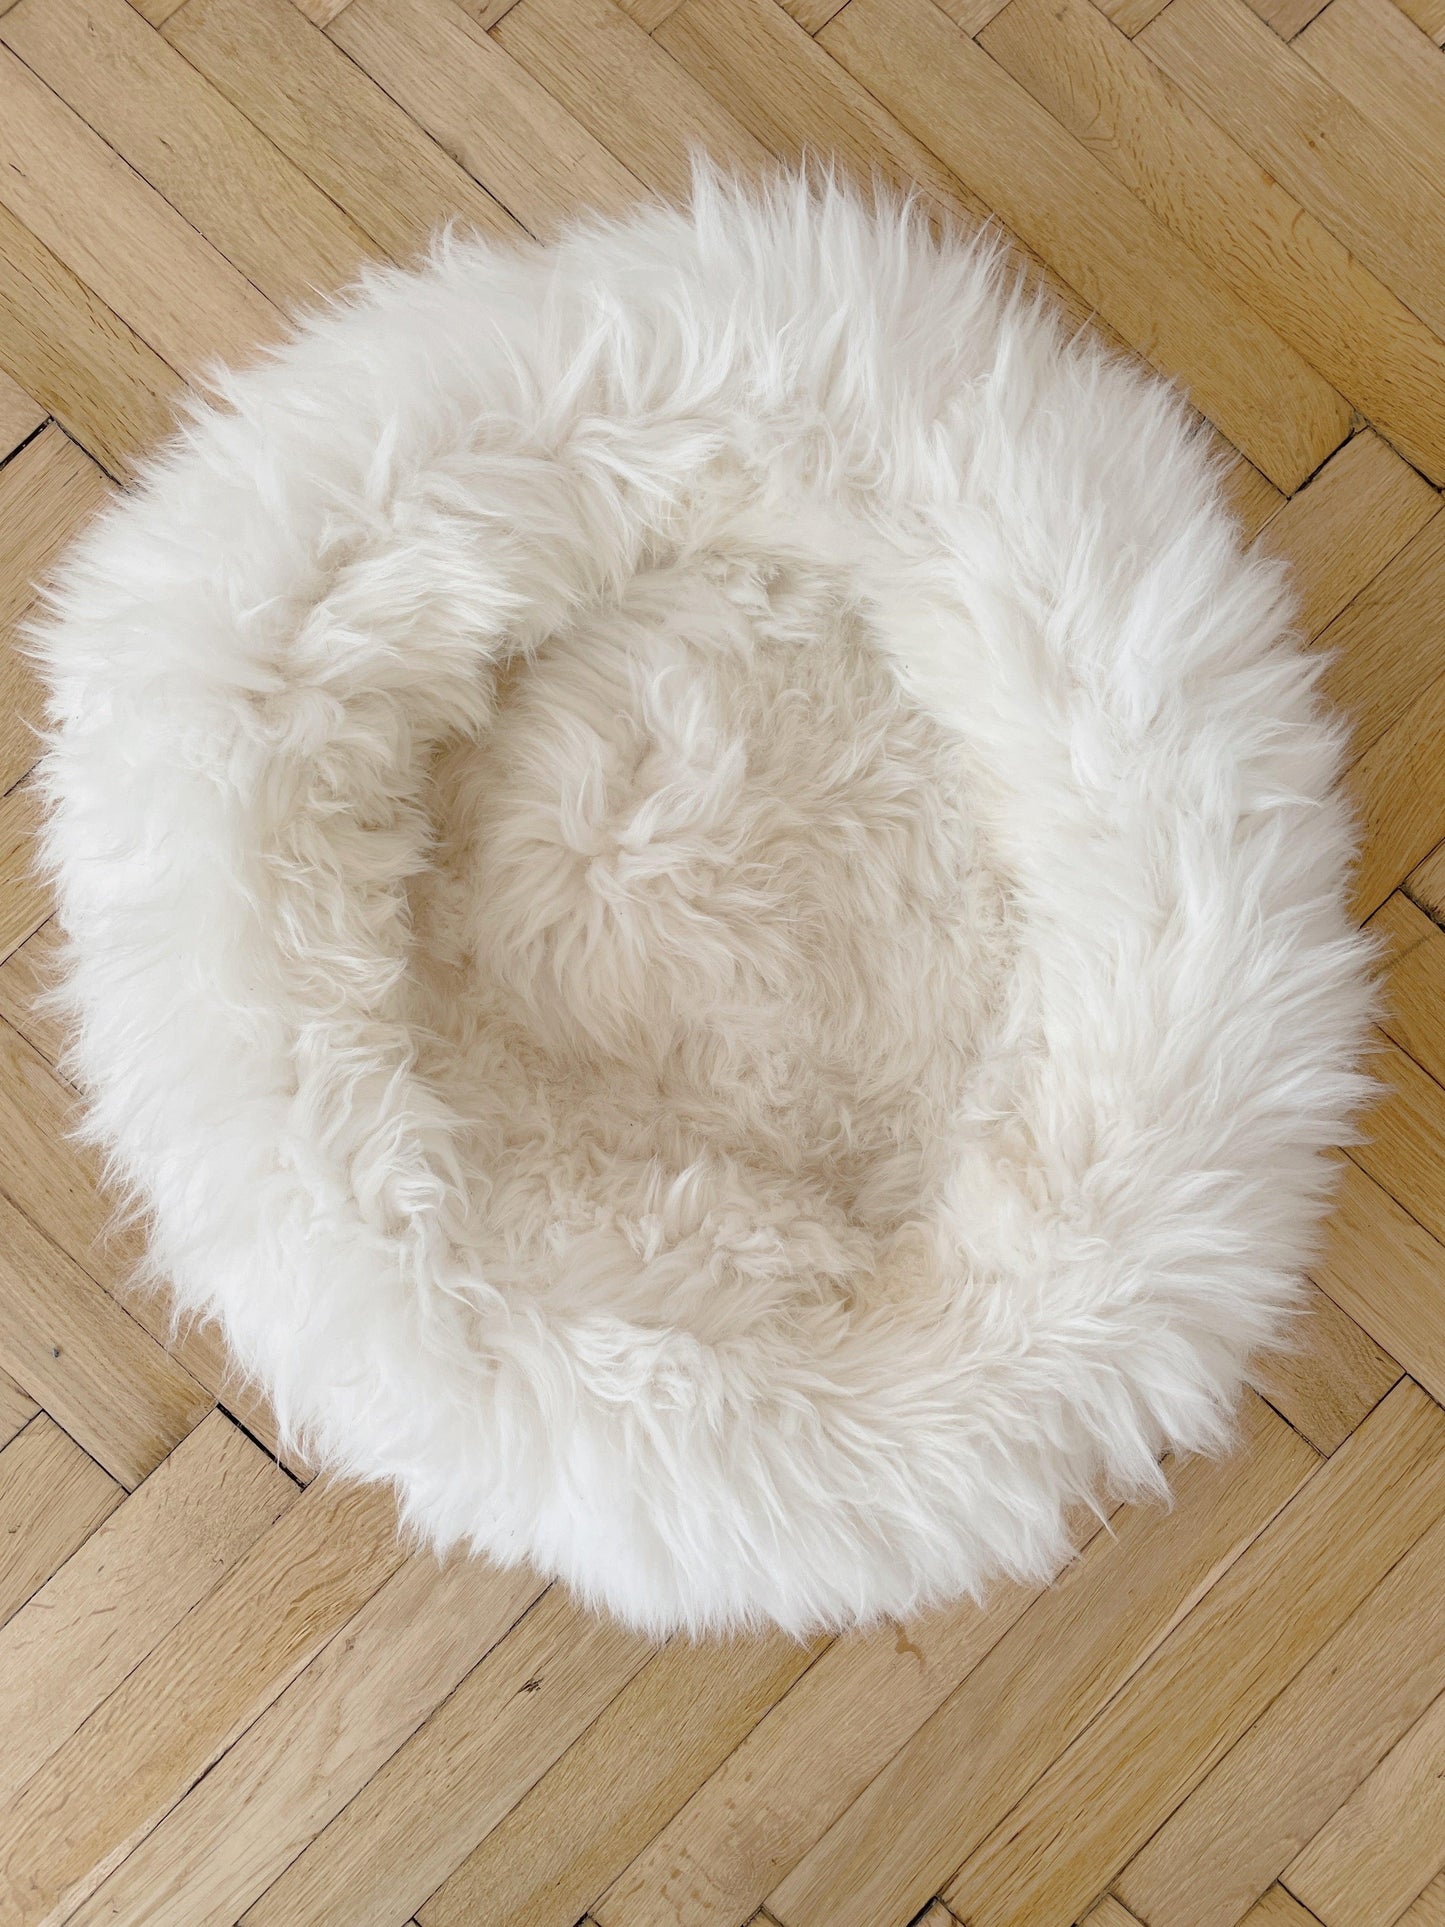 An organic Round Natural Sheepskin Pet Bed from Mellow Pet Store on a wooden floor.